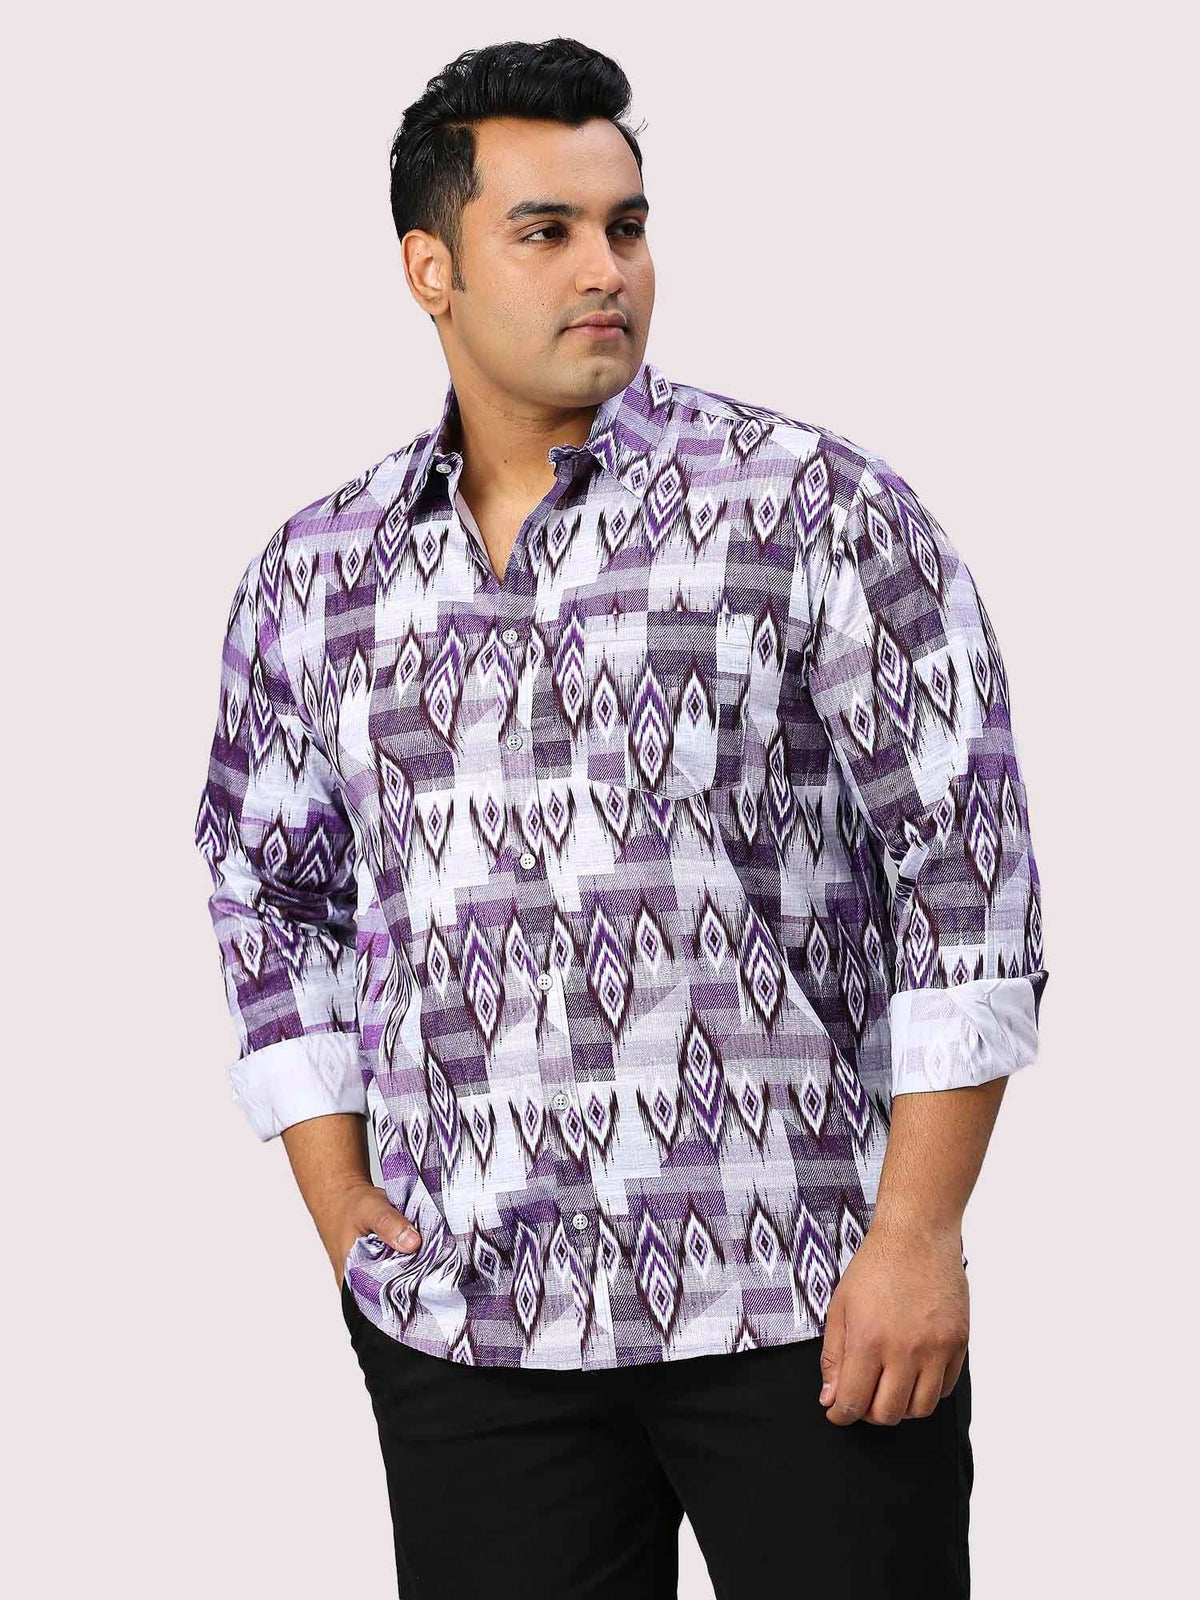 Grape Digital Printed Full Sleeve Shirt Men's Plus Size - Guniaa Fashions